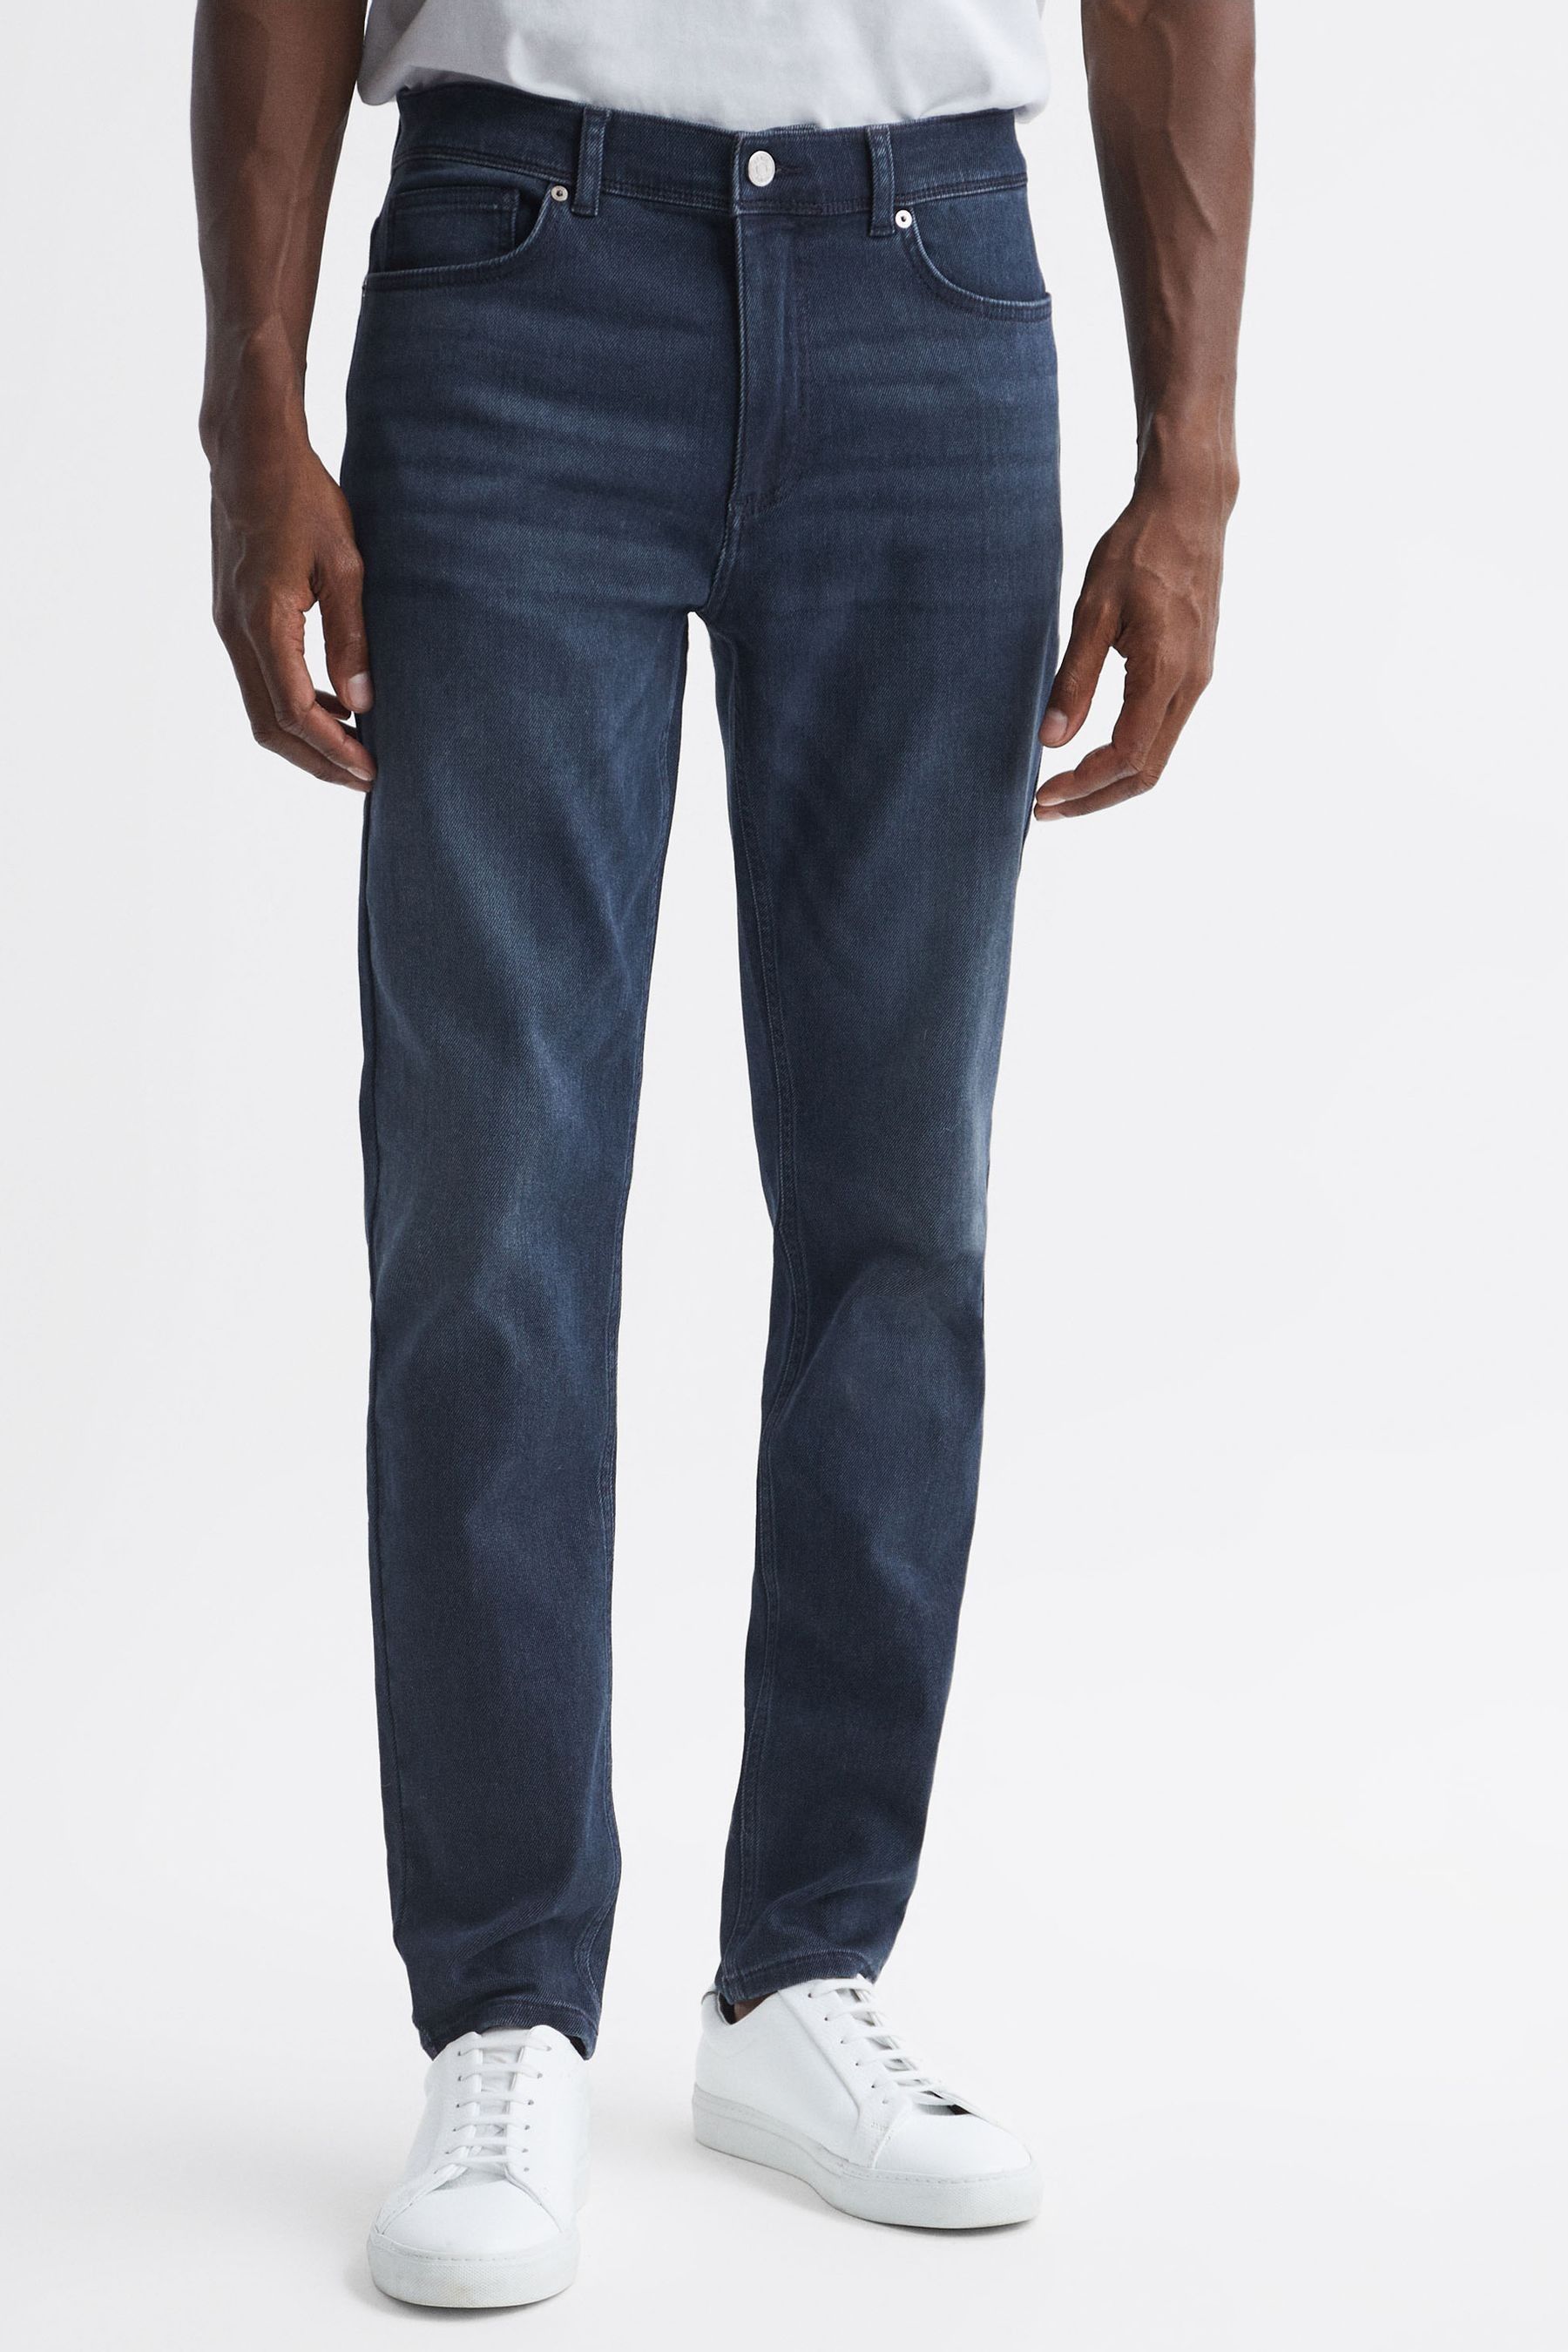 Reiss Littleton - Indigo Slim Fit Mid Rise Jeans, 28